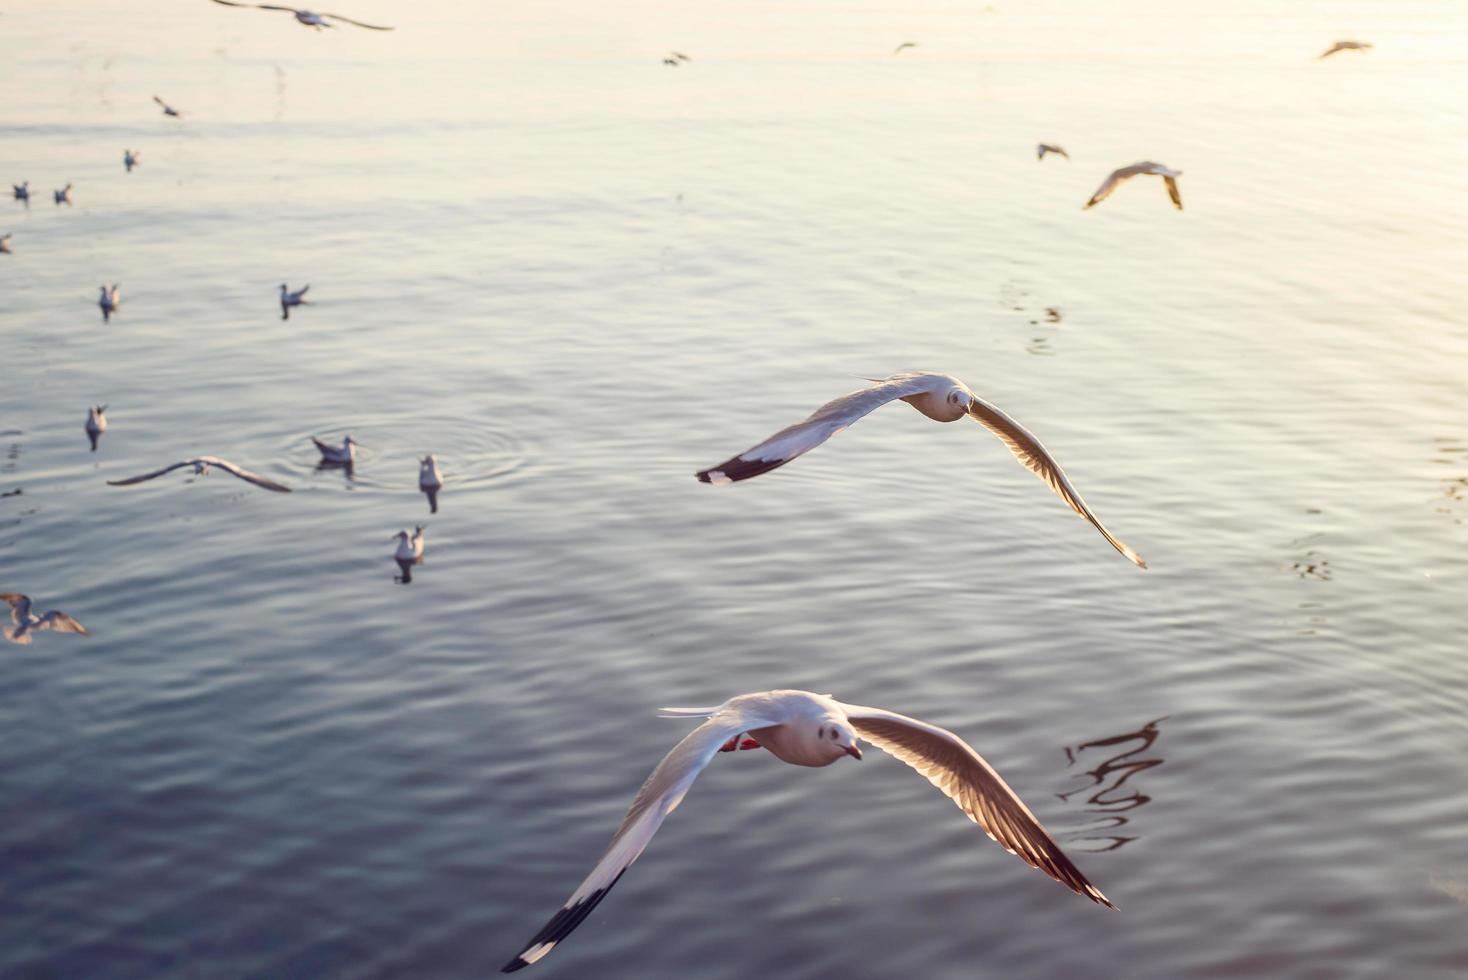 gaivotas voando no mar ao pôr do sol foto